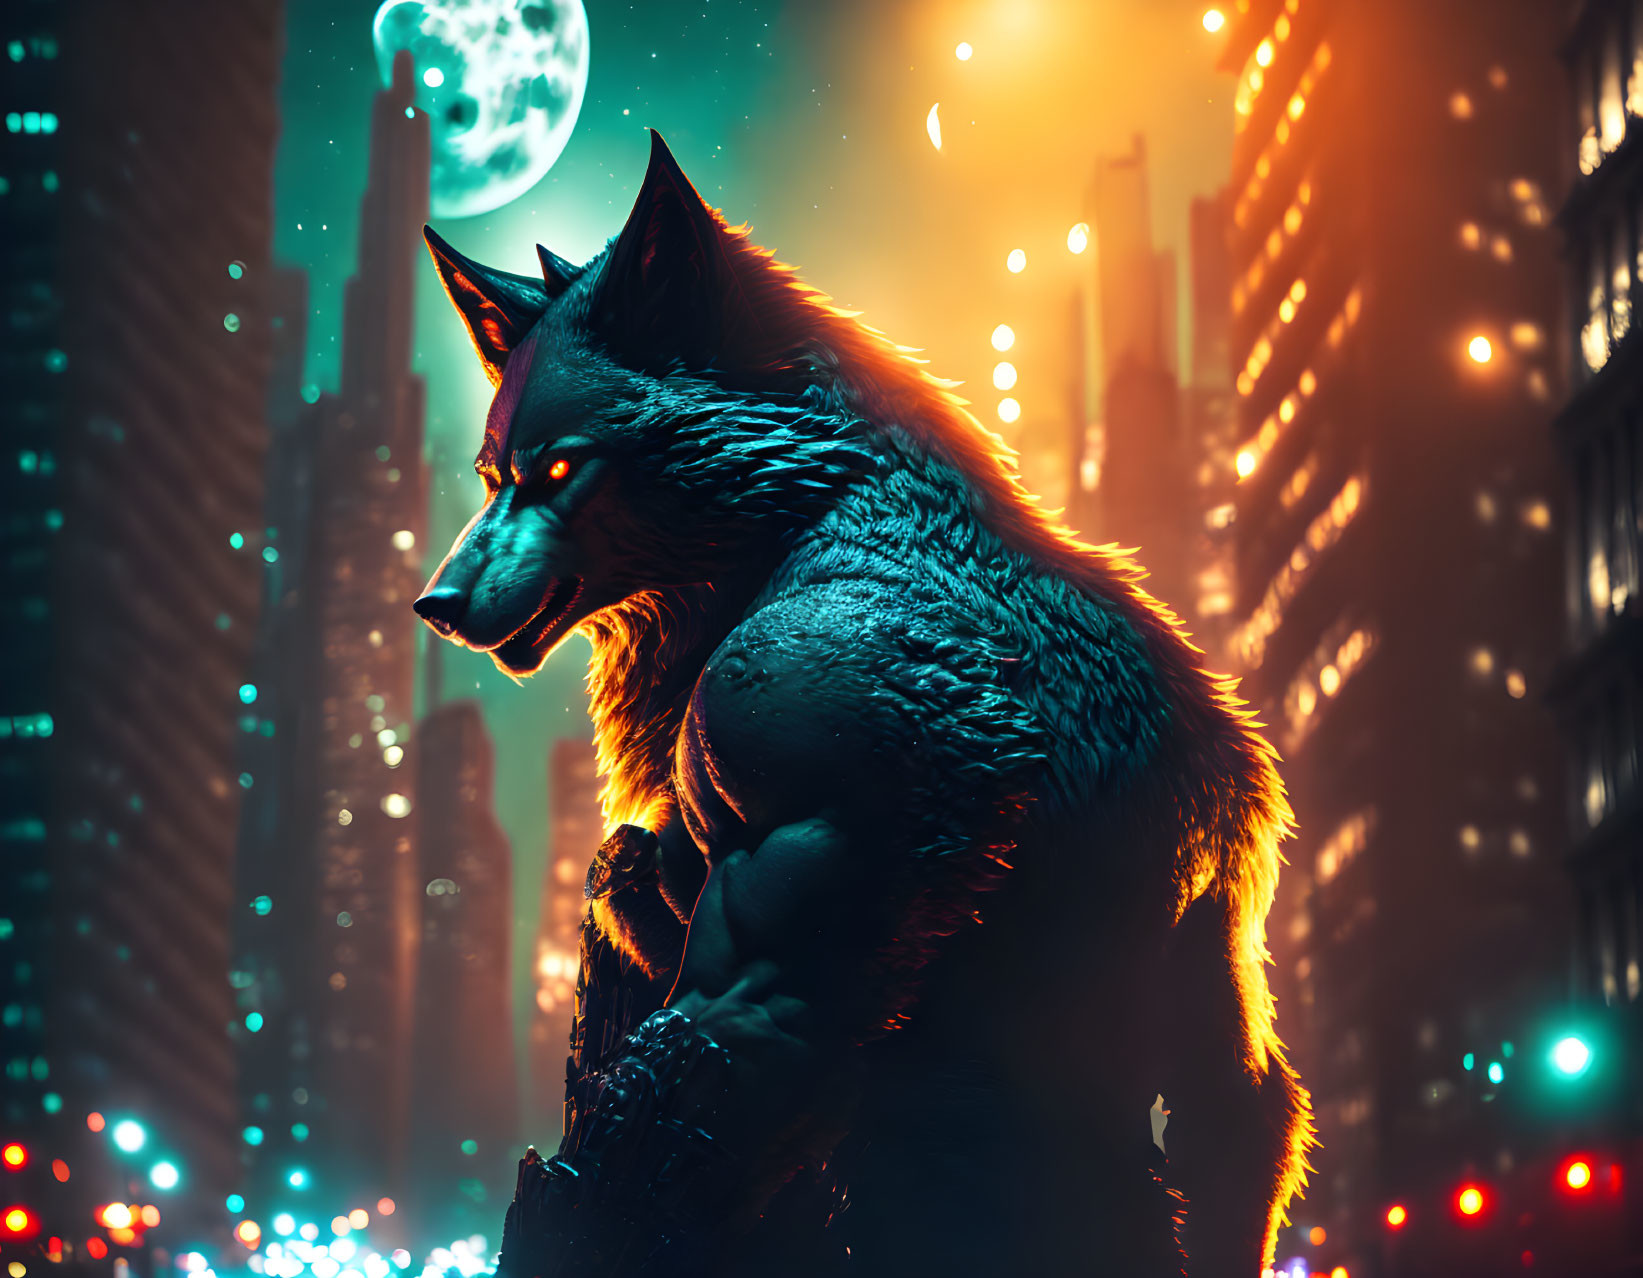 Anthropomorphic wolf in neon-lit city under full moon